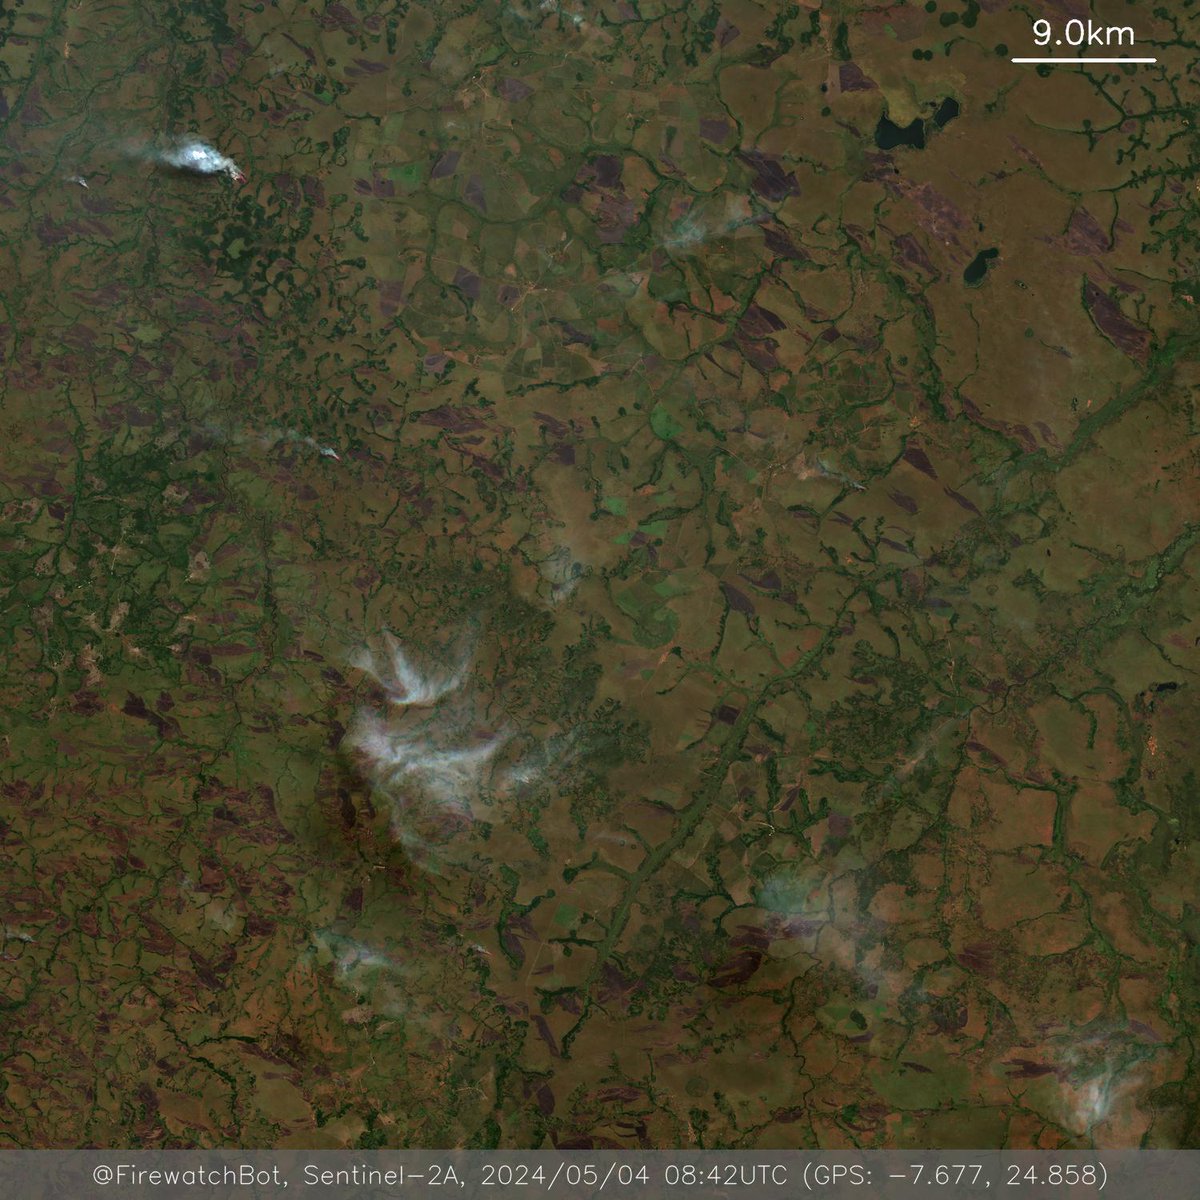 Fire detected from #Sentinel2

🗺 Place: Kamina, Haut-Lomami, #DemocraticRepublicoftheCongo
🕛 Date: 2024/05/04 08:42UTC

View location: maps.google.com/?q=-7.67699825… (-7.677, 24.858)